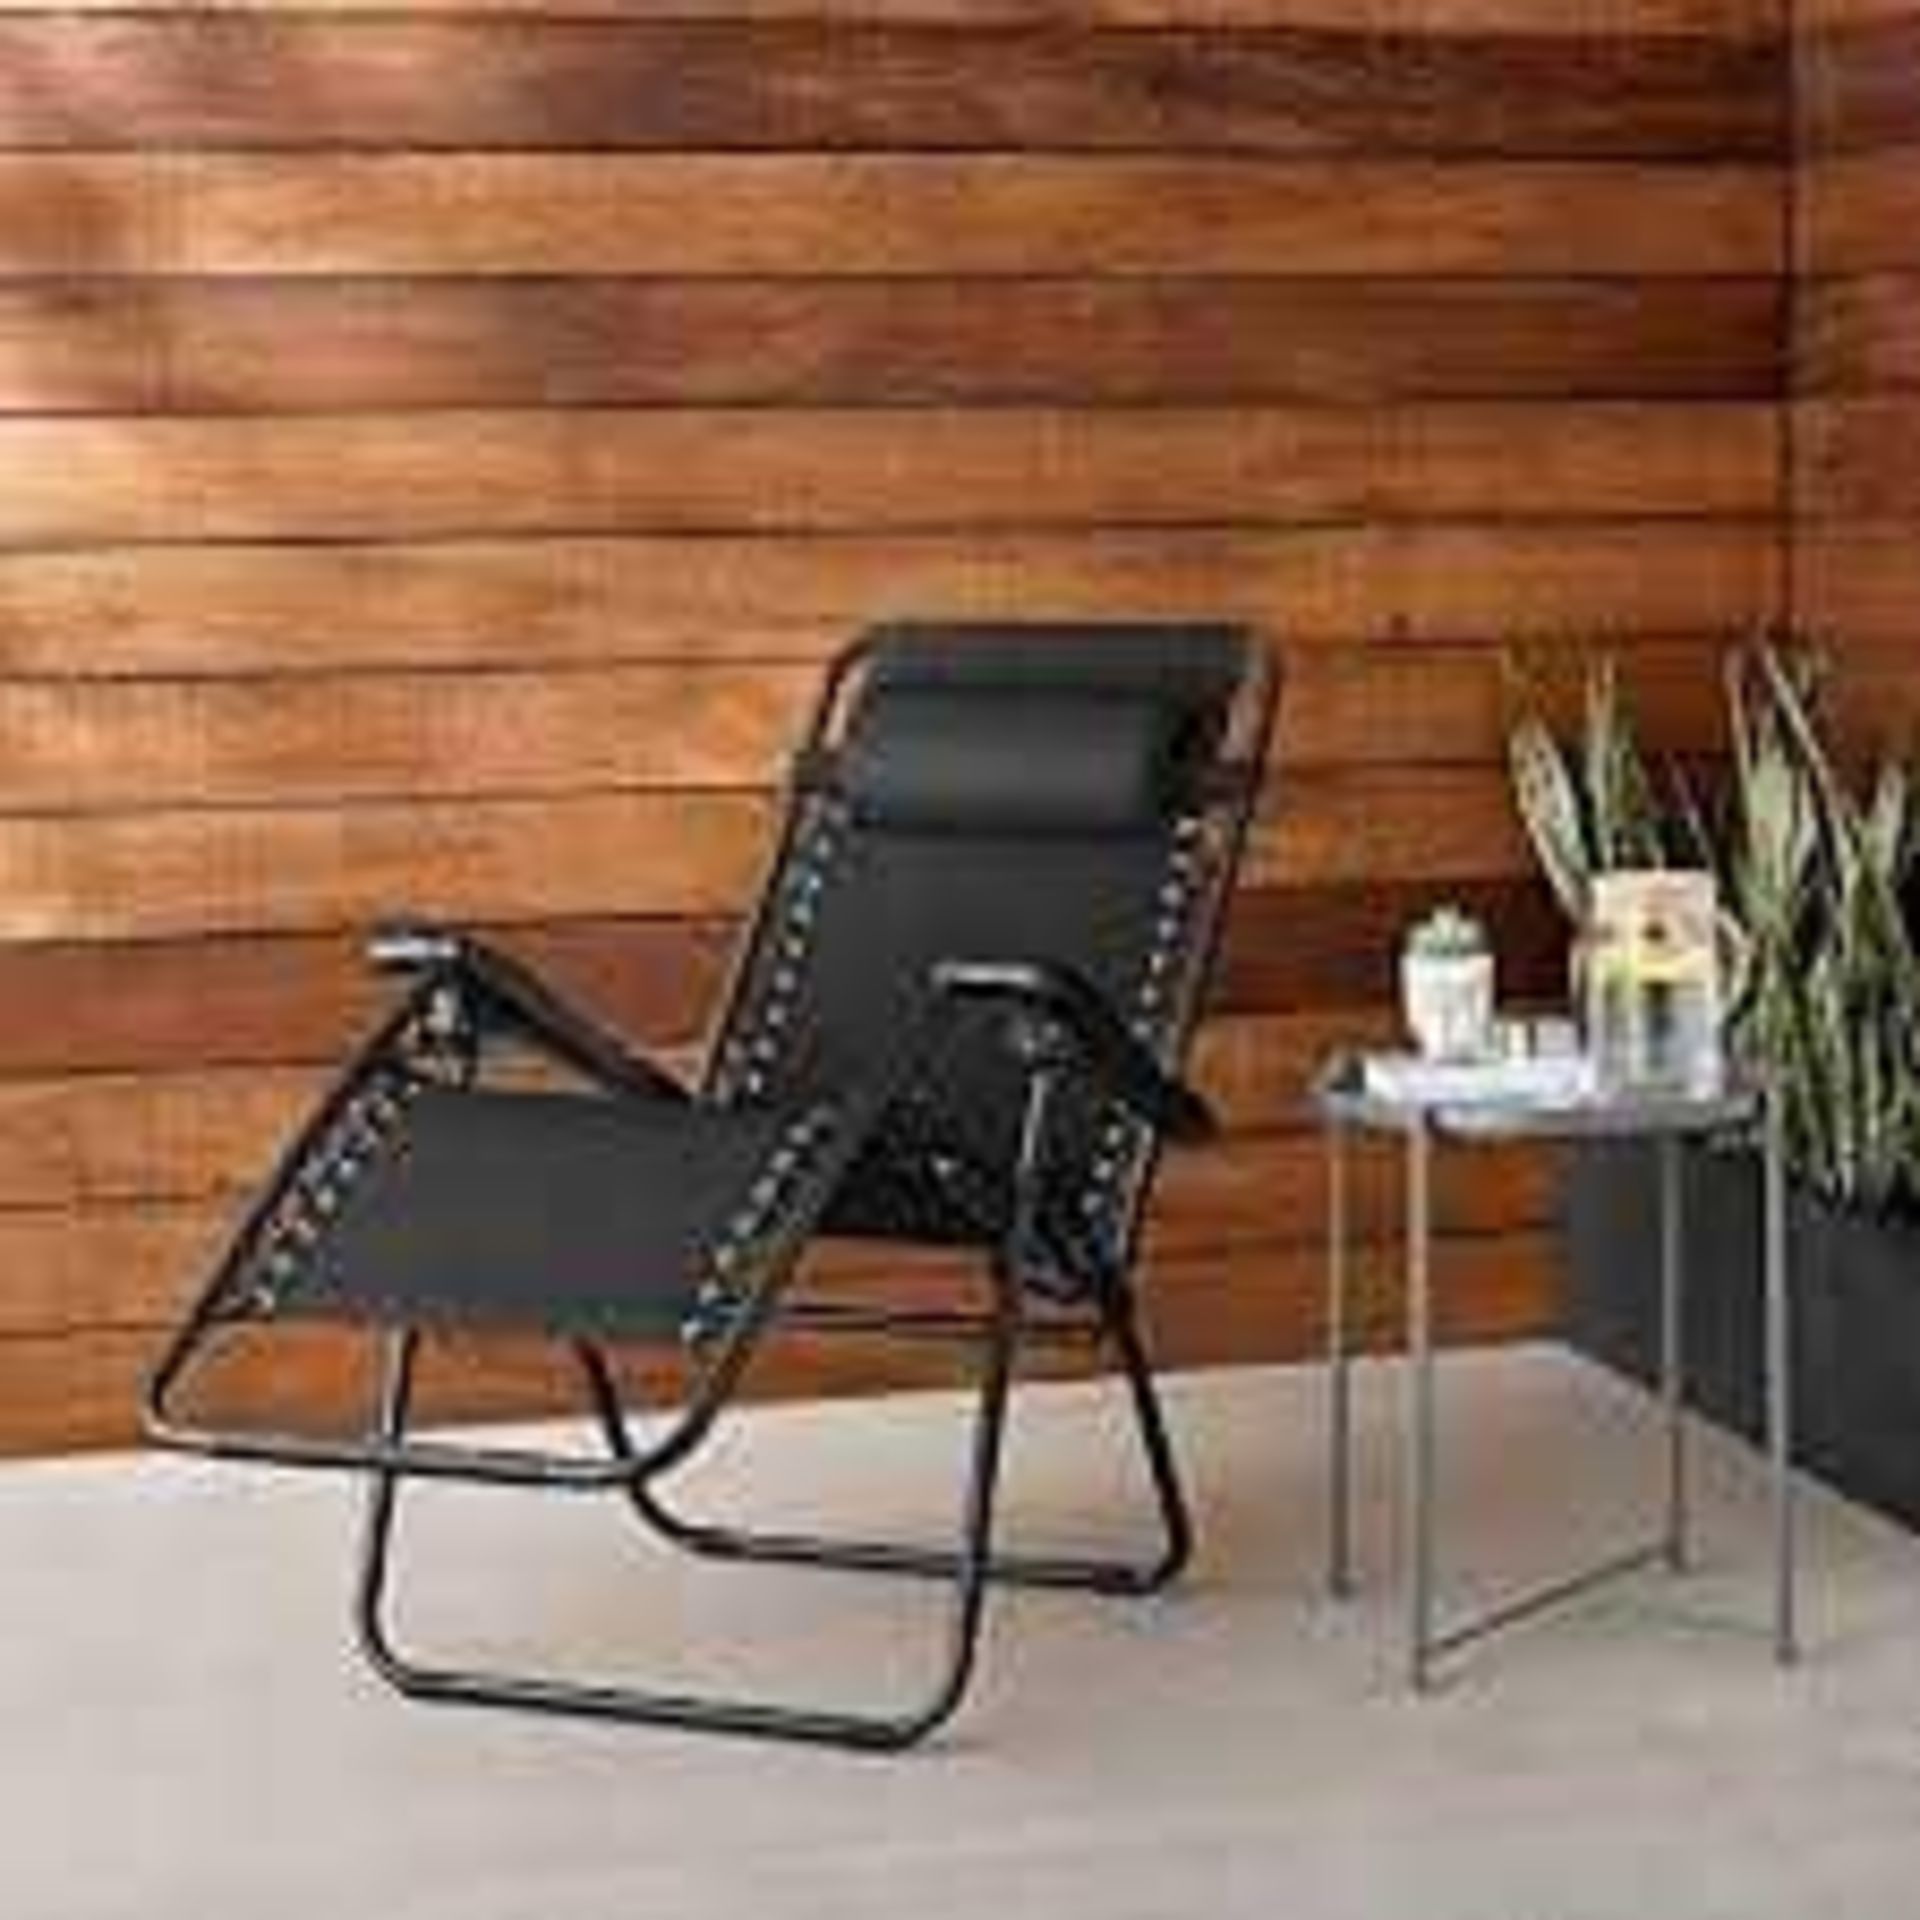 RRP £100 Brand New Adjustable Chair 2-Piece Set Amazon Basics